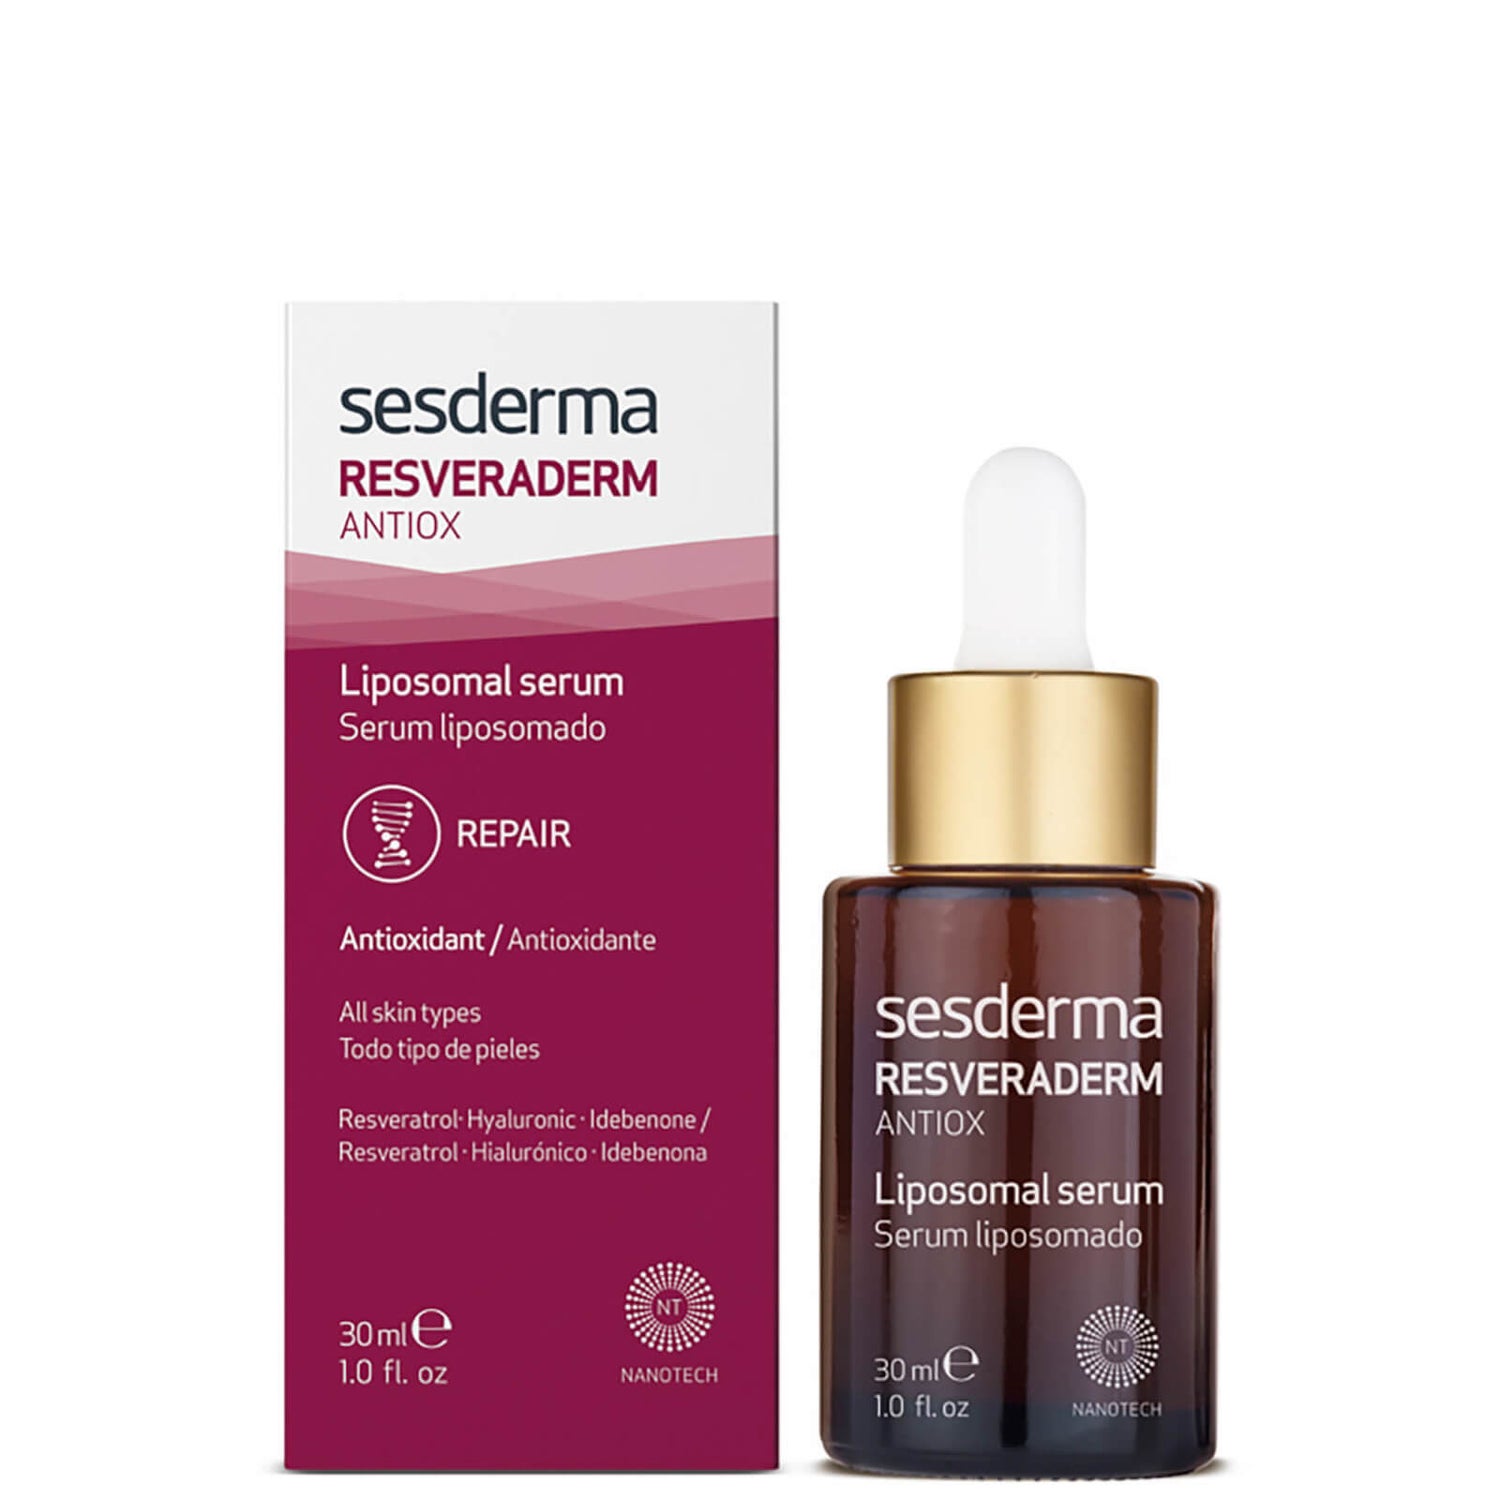 Sesderma Resveraderm Antioxidant Serum 30ml